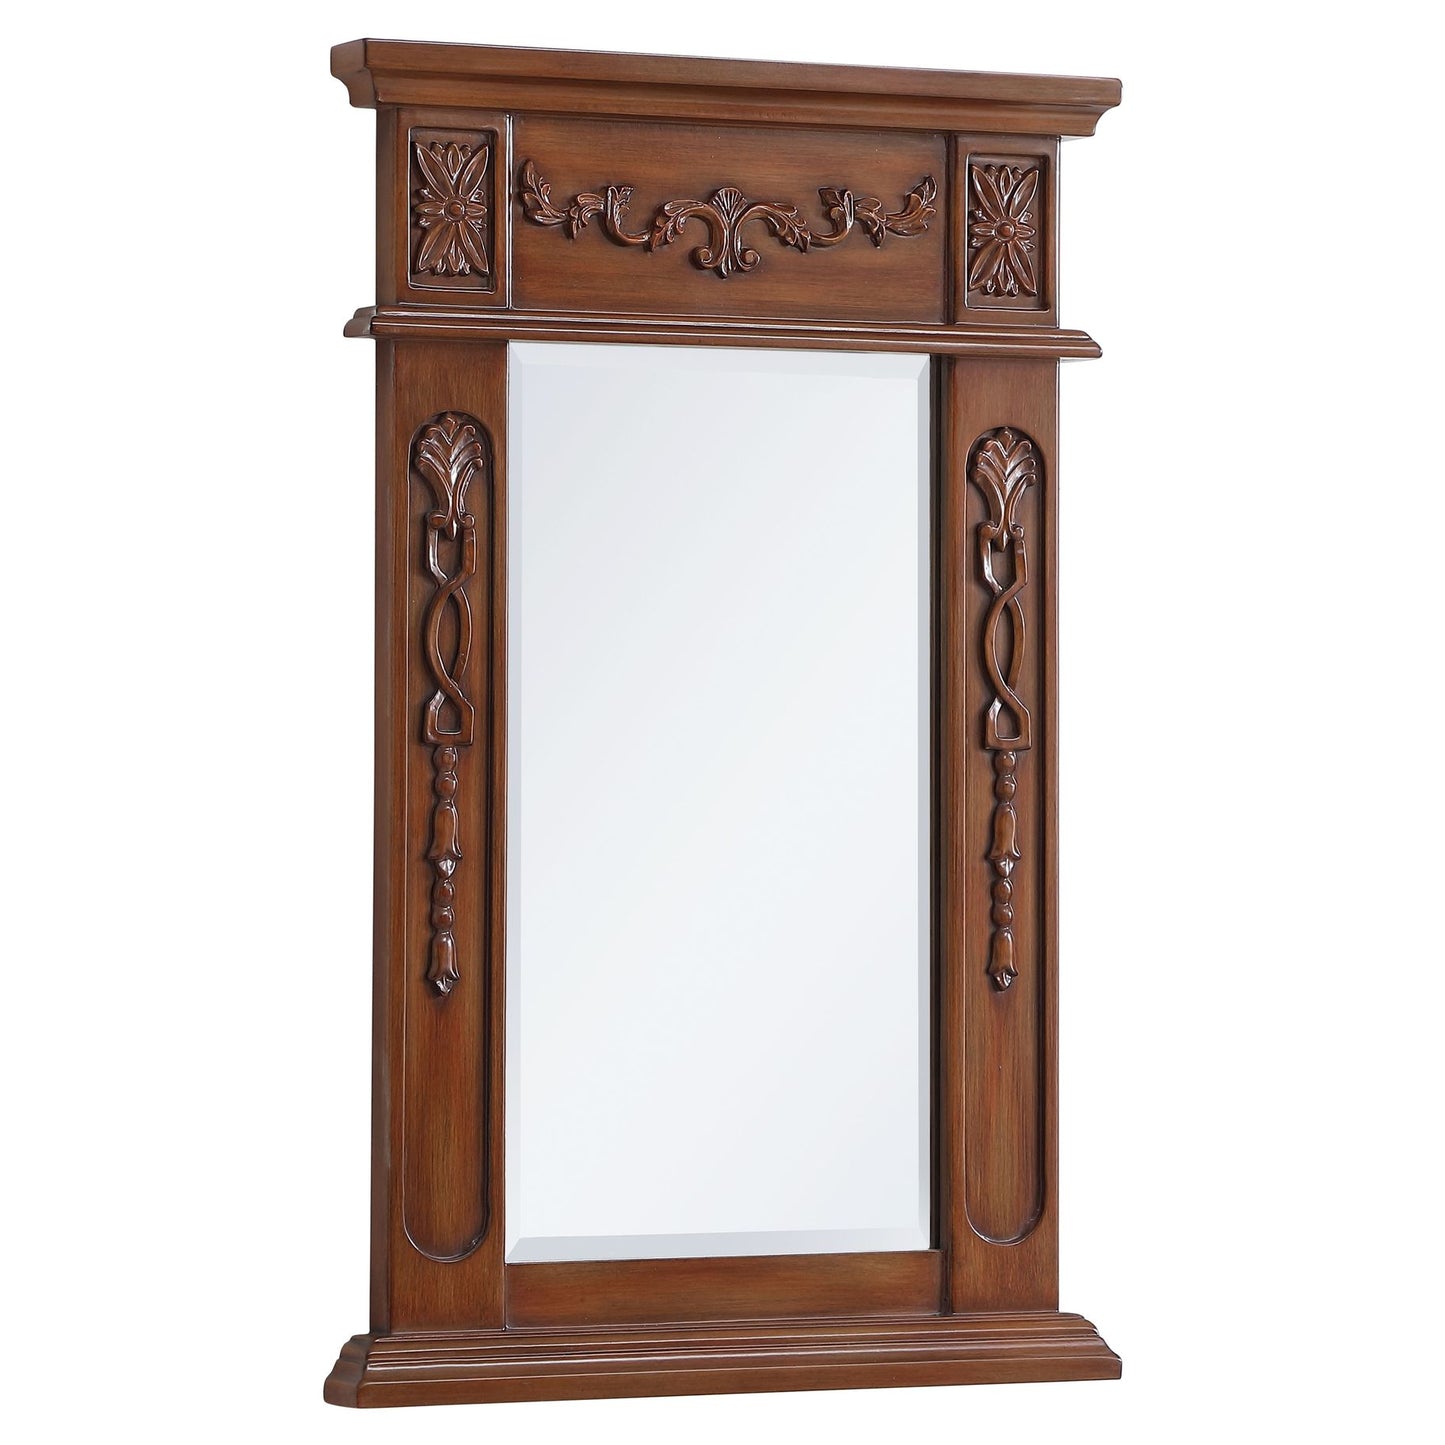 VM11828TK Danville 18" x 28" Wood Framed Decorative Mirror in Teak